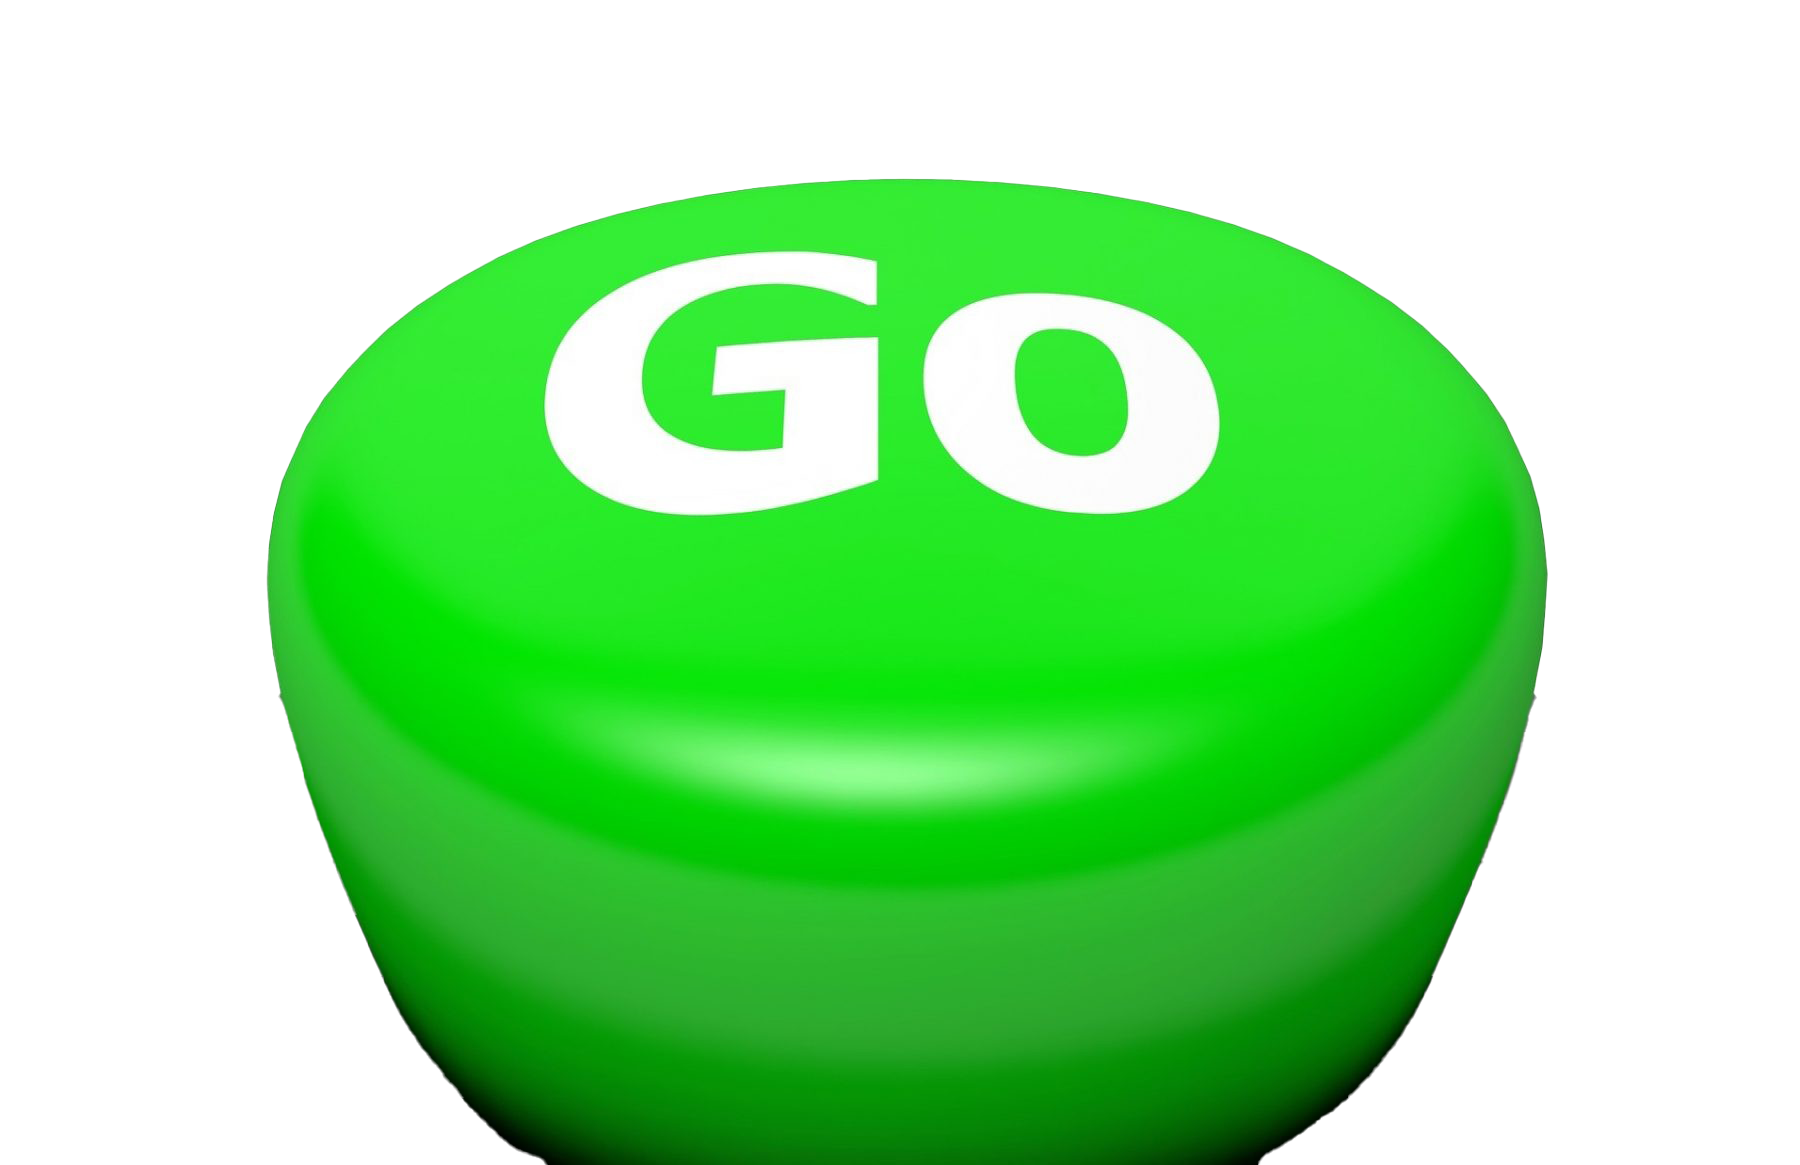 Immagine Trasparente bottone verde